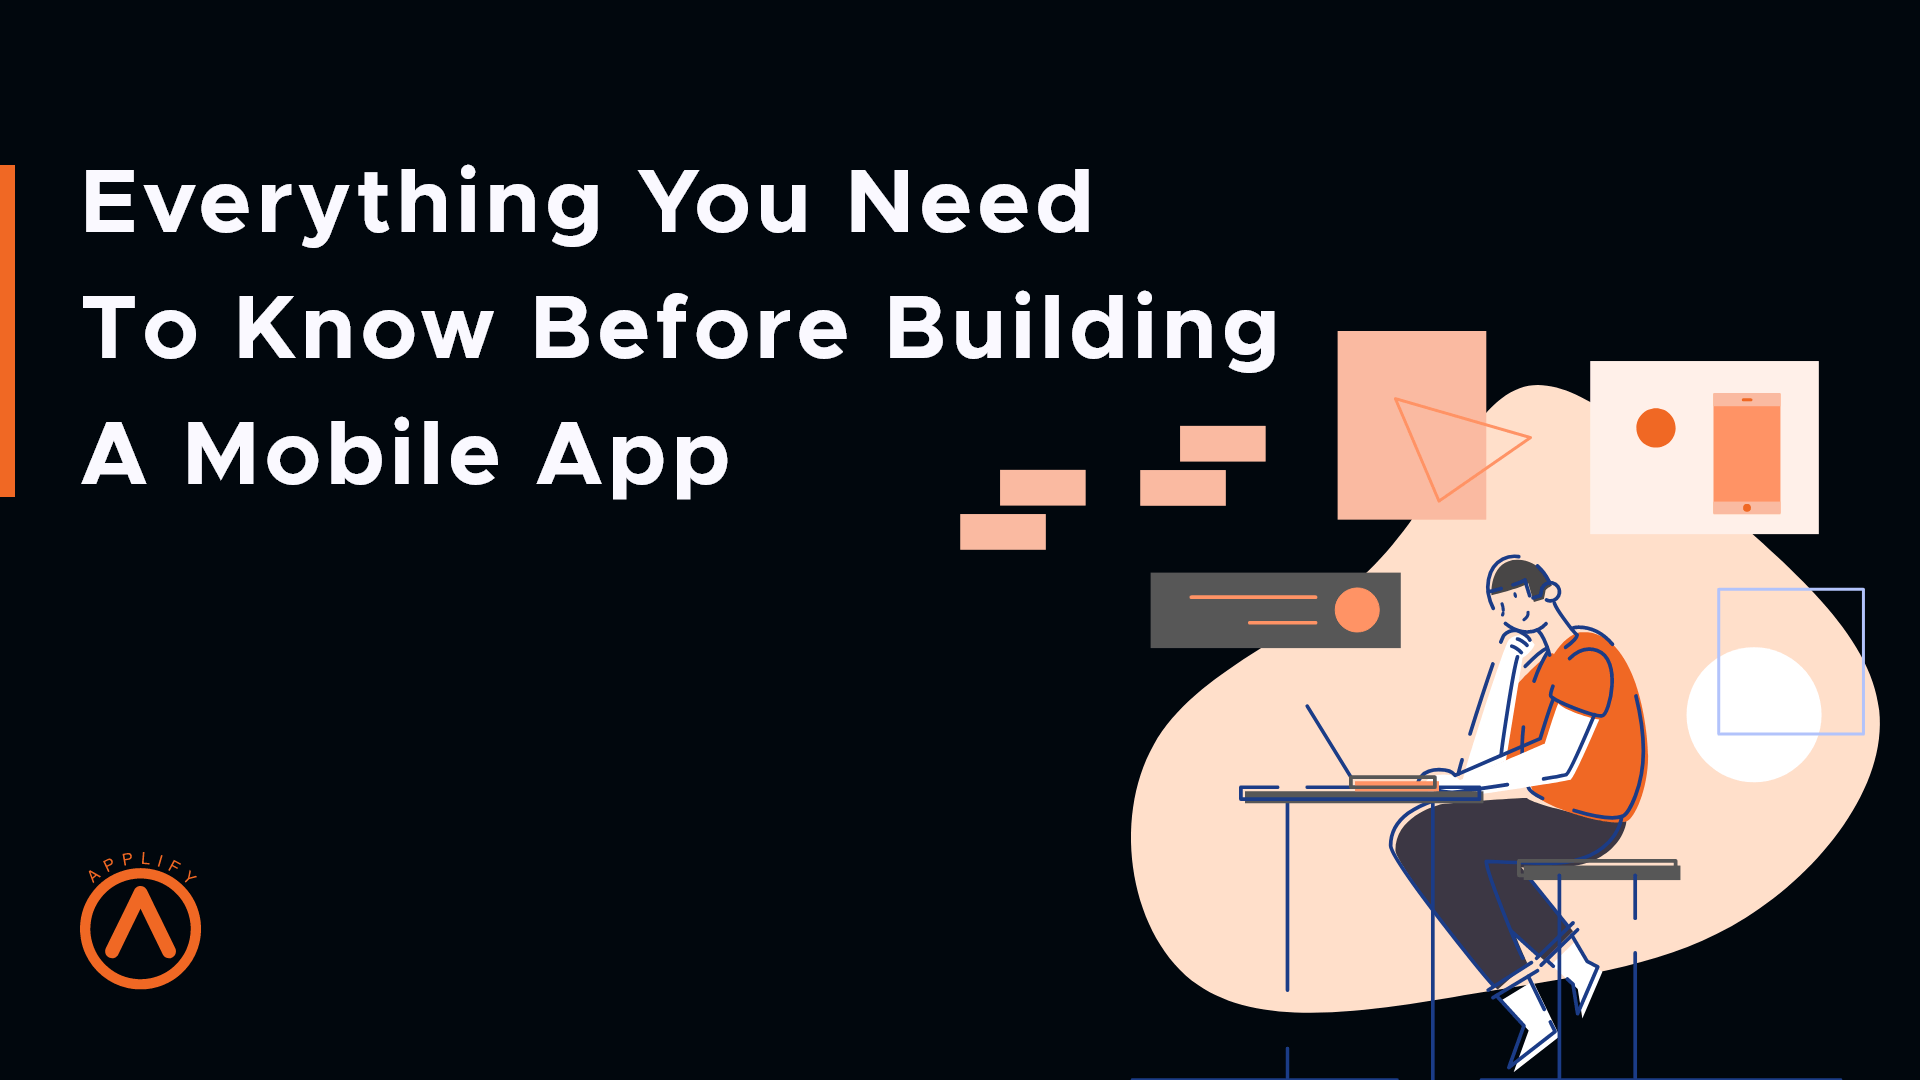 latest mobile app development trends